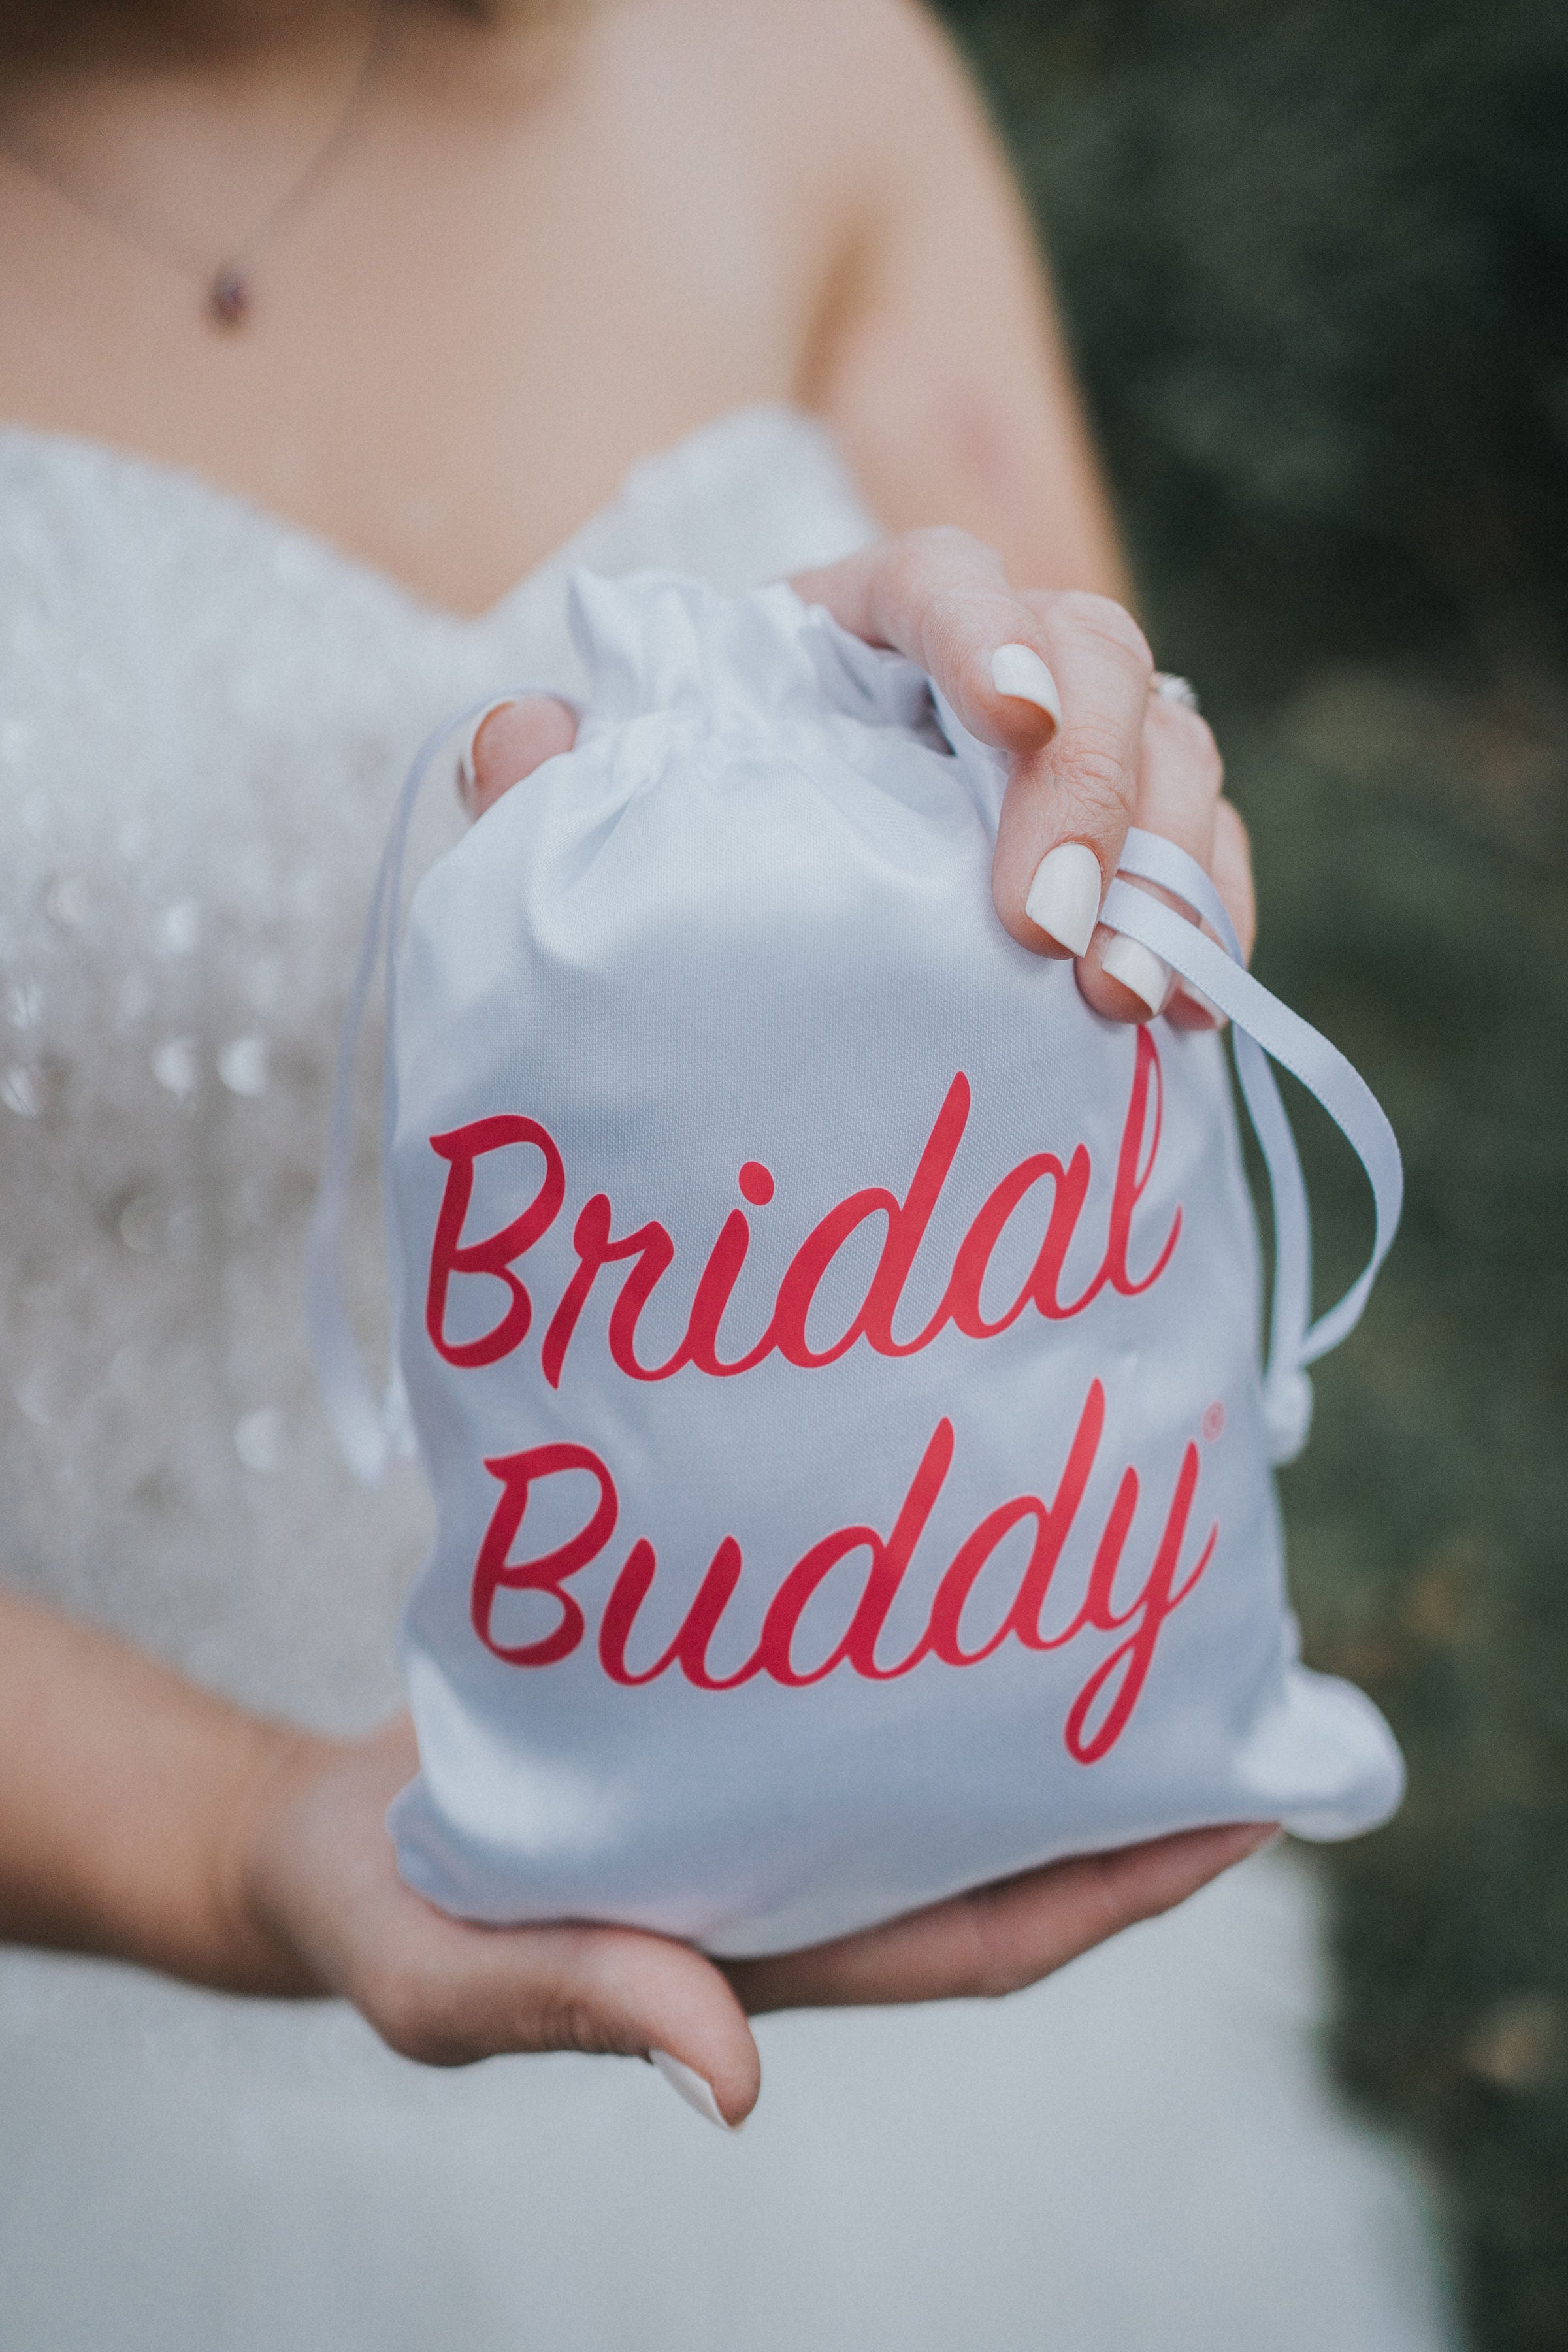 Bridal Buddy💍🚽👰🏼 (@bridalbuddy) • Instagram photos and videos